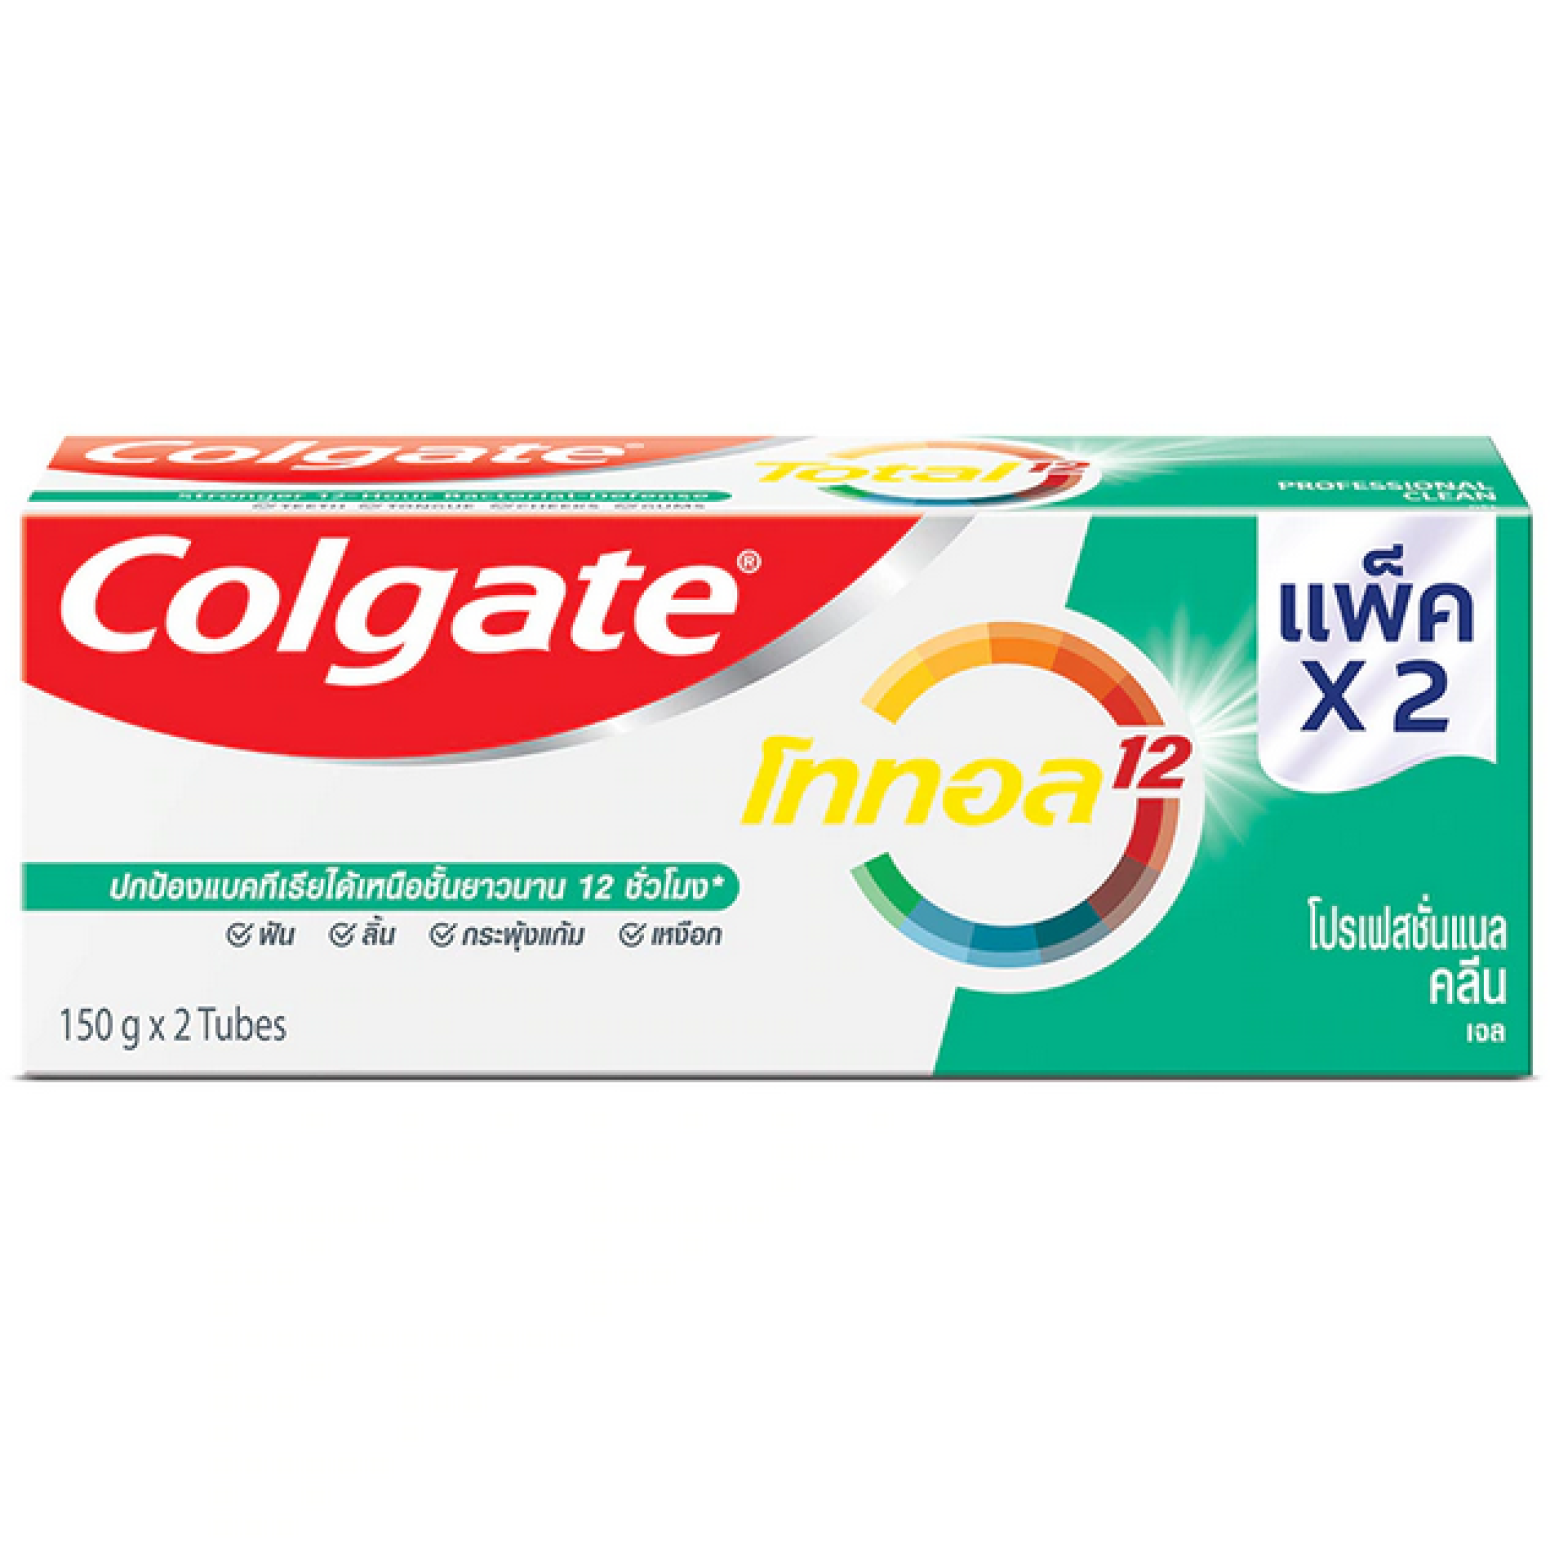 Colgate Total Professional Gel Toothpaste